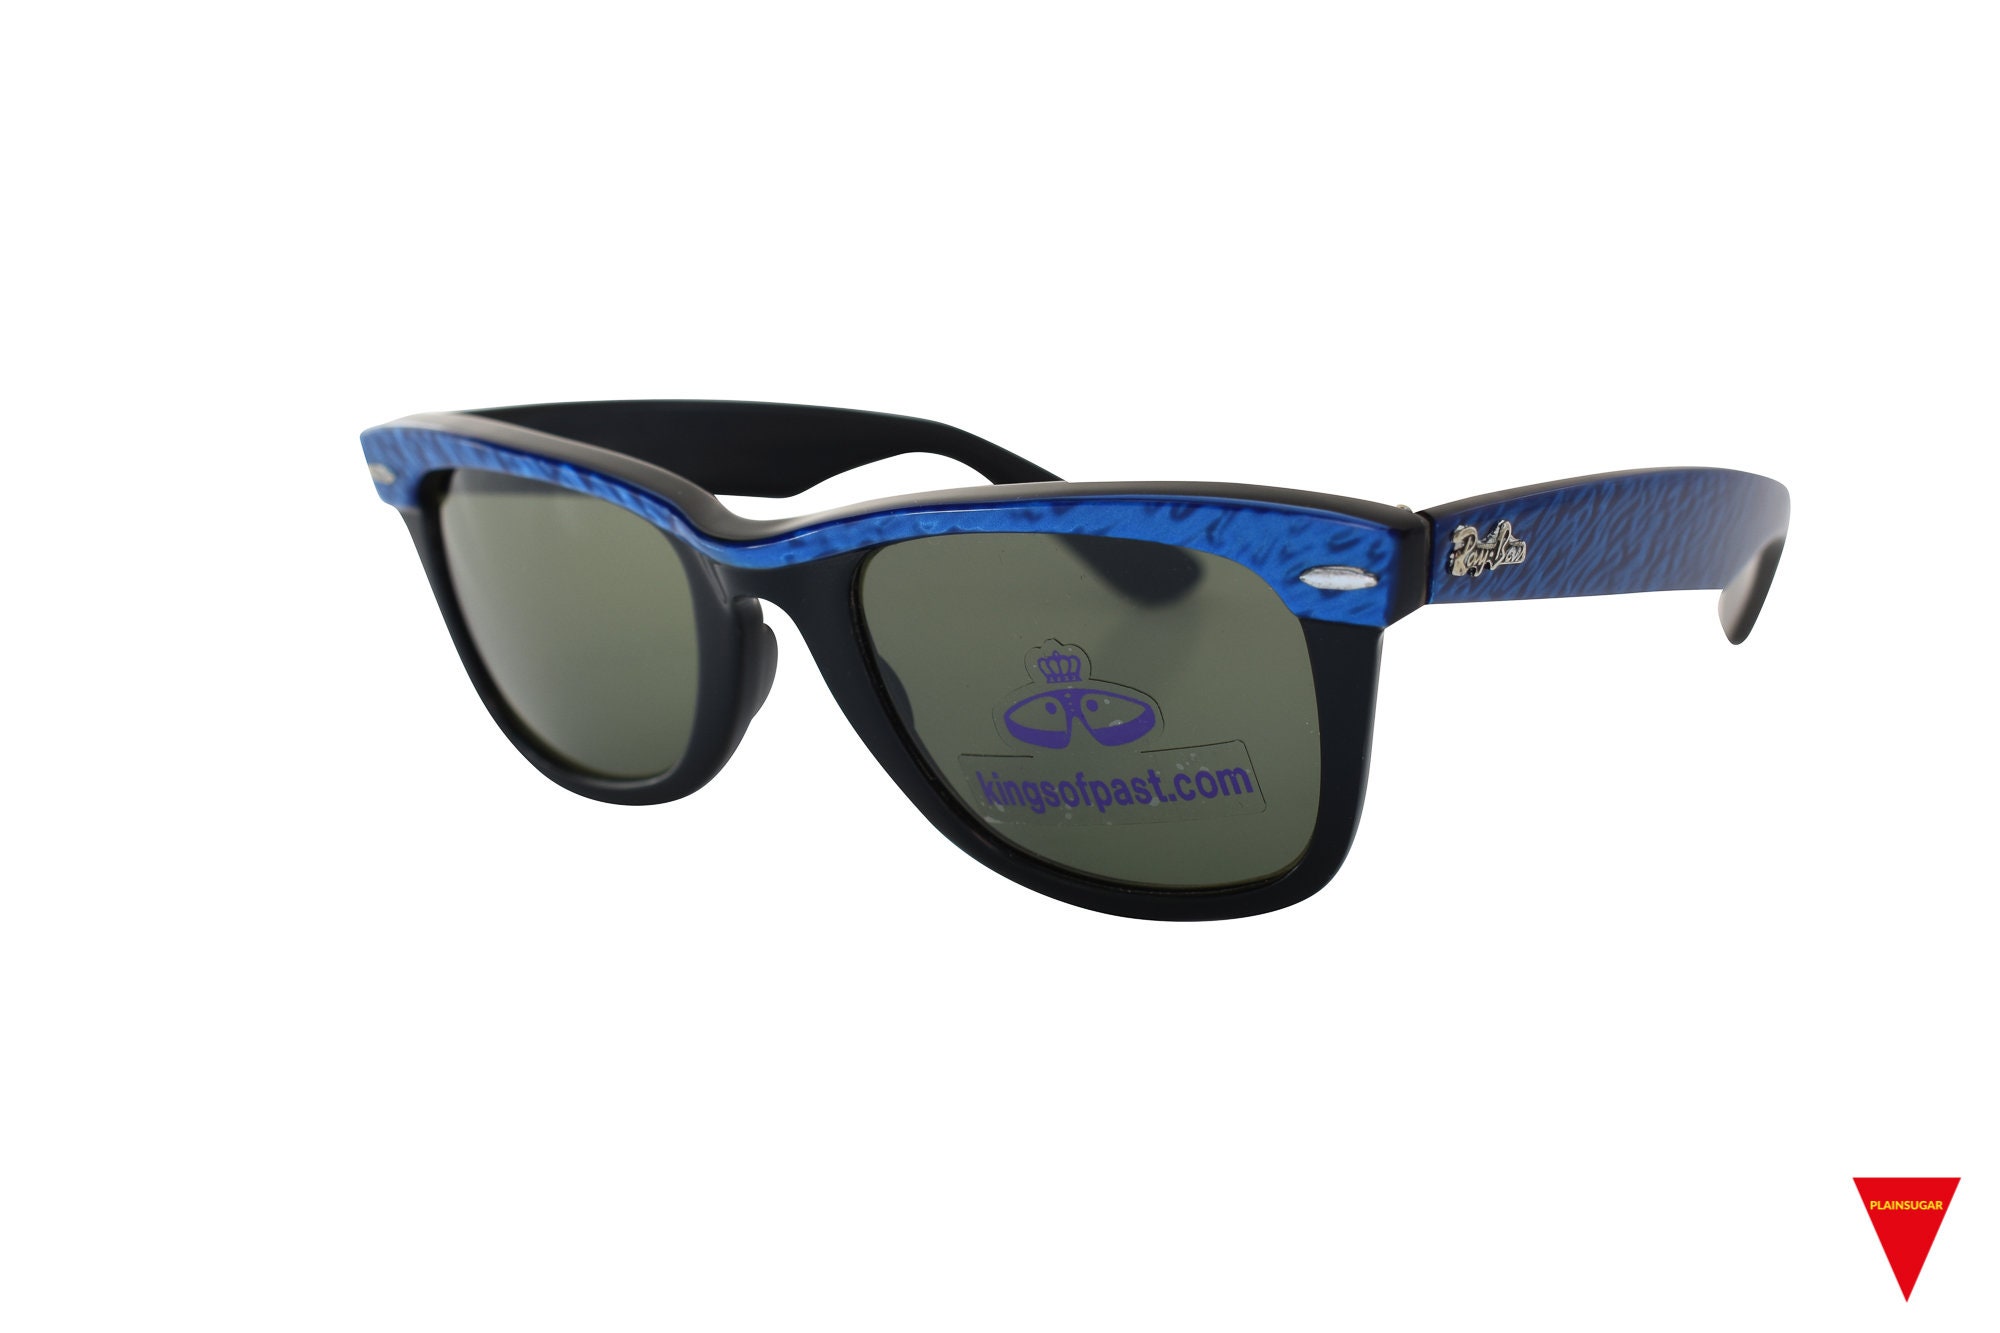 Original 80's Rayban Wayfarer Sunglasses, Black Frame With Blue